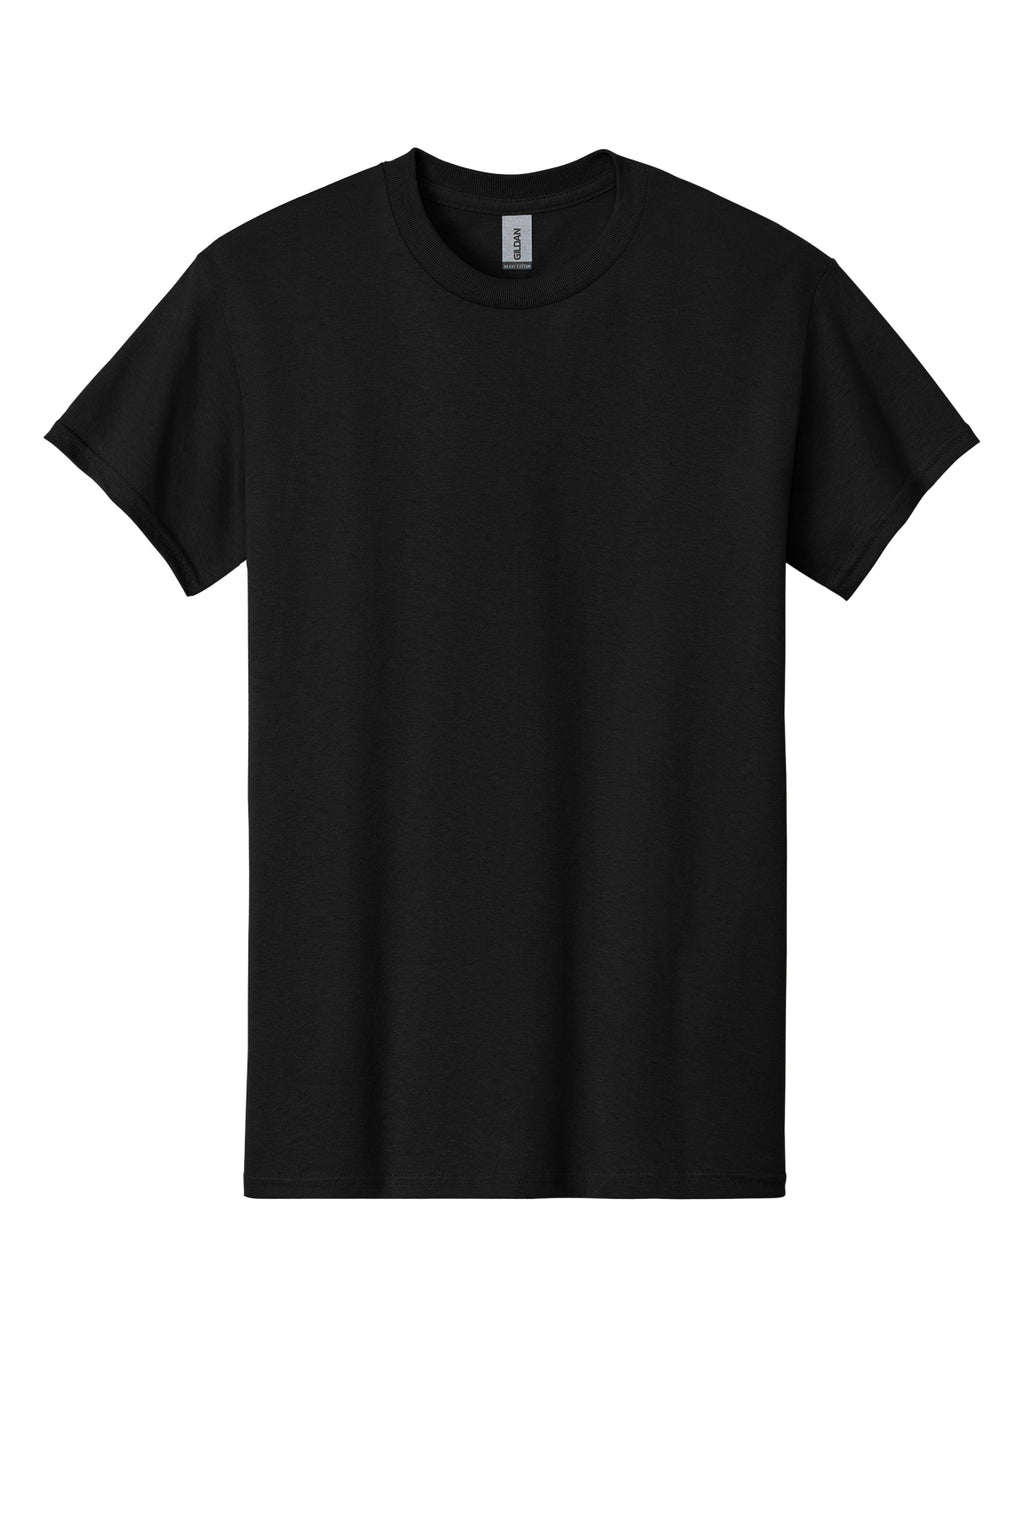 Gildan Mens/Unisex S/S Shirts Black